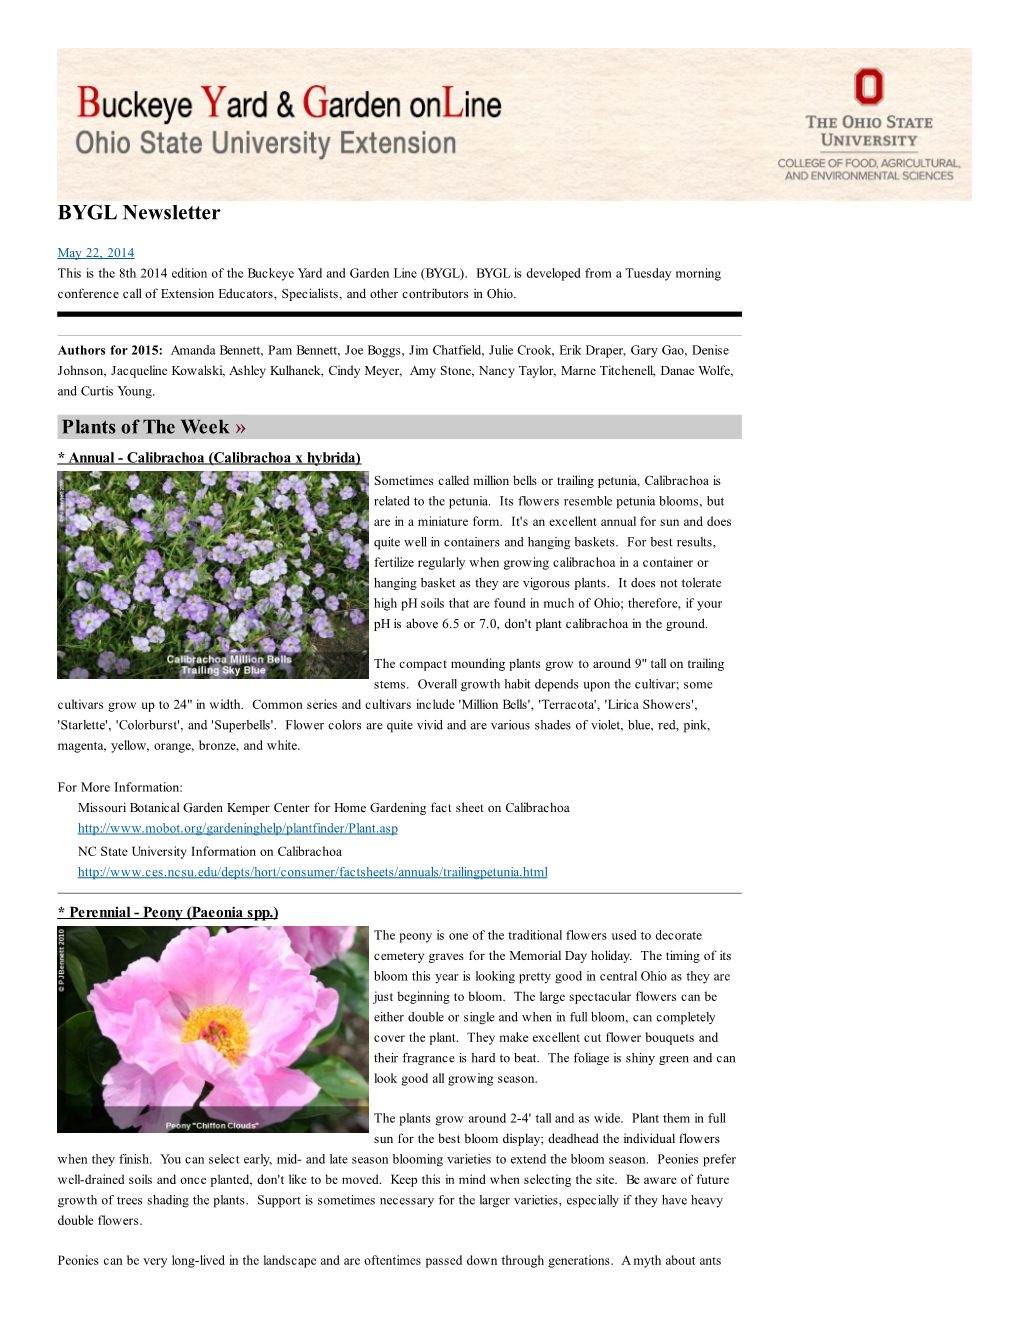 BYGL Newsletter | Buckeye Yard & Garden Online